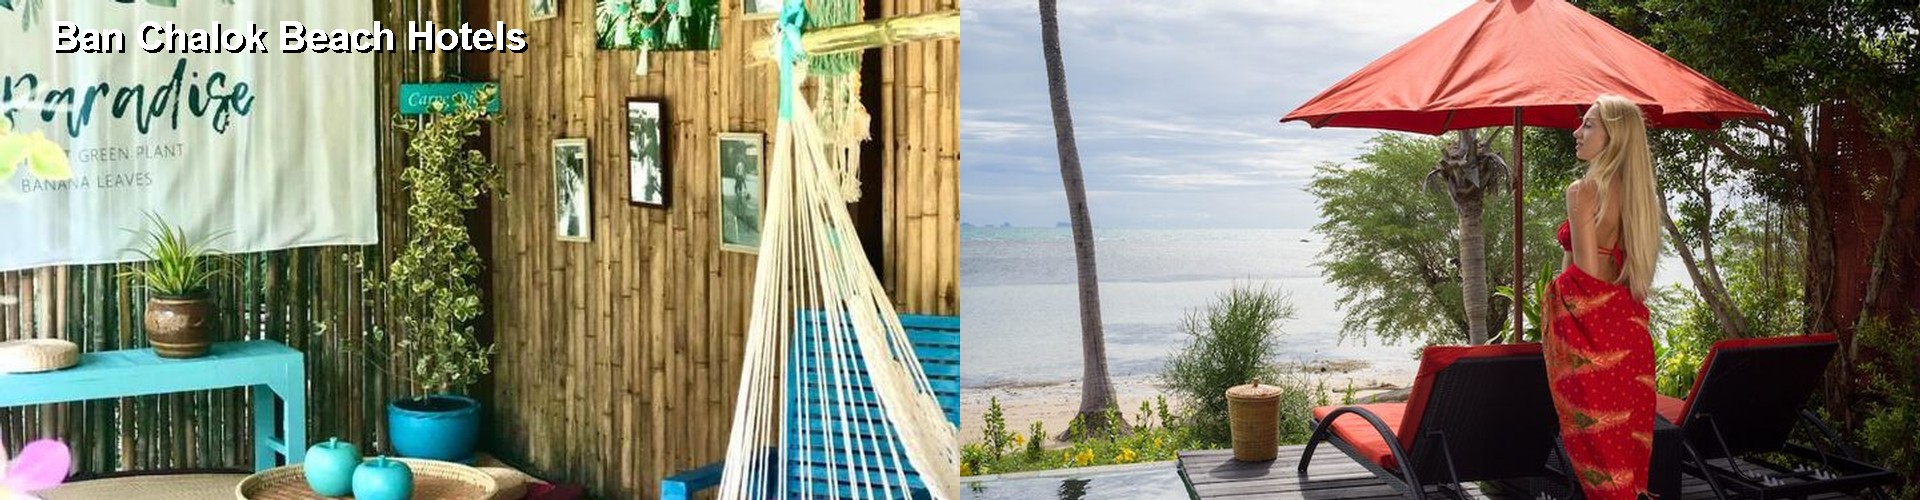 5 Best Hotels near Ban Chalok Beach